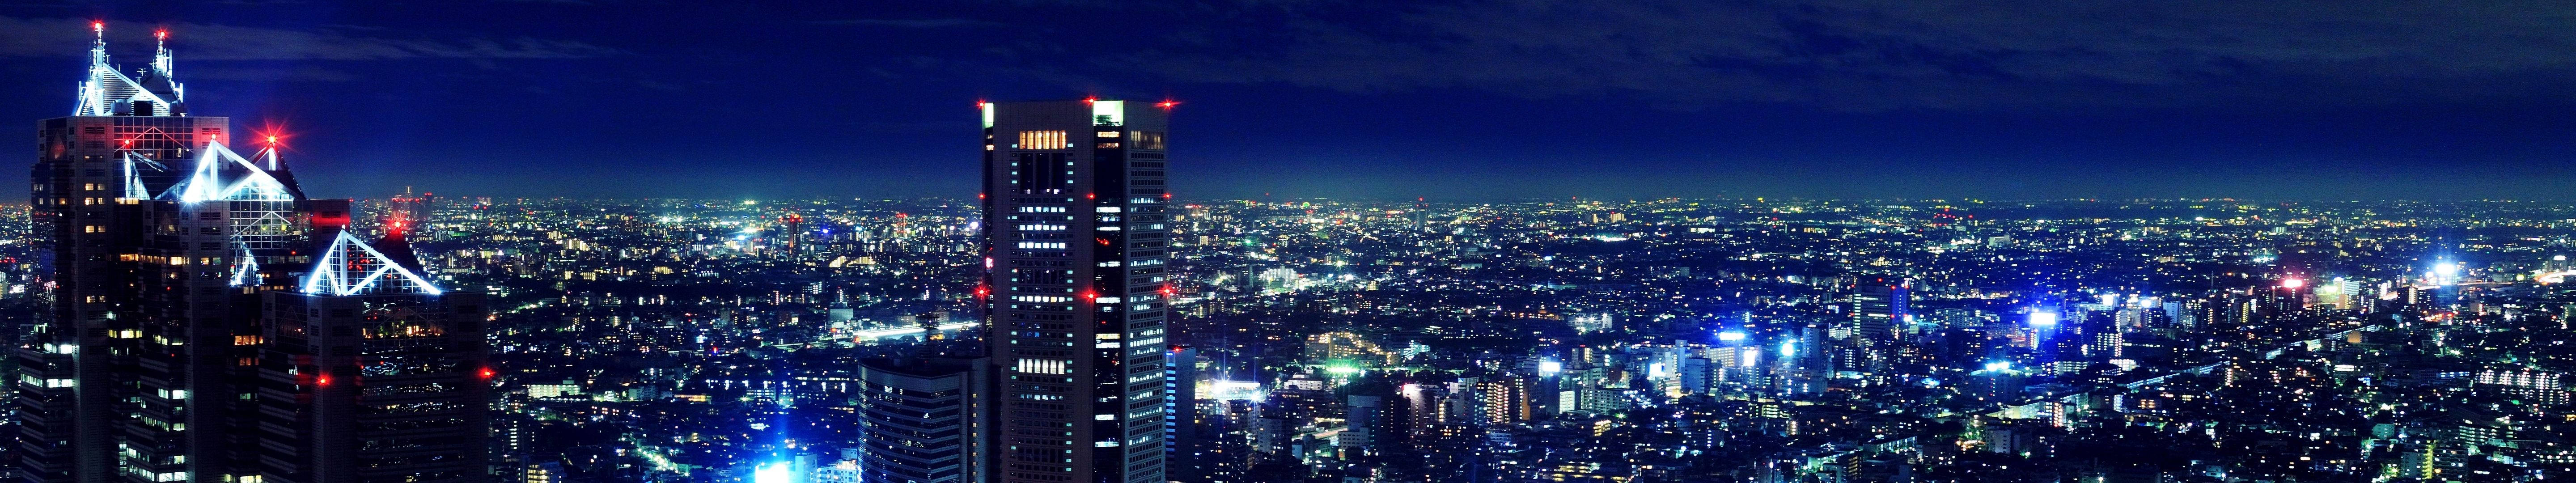 3 Monitor Tokyo Night City